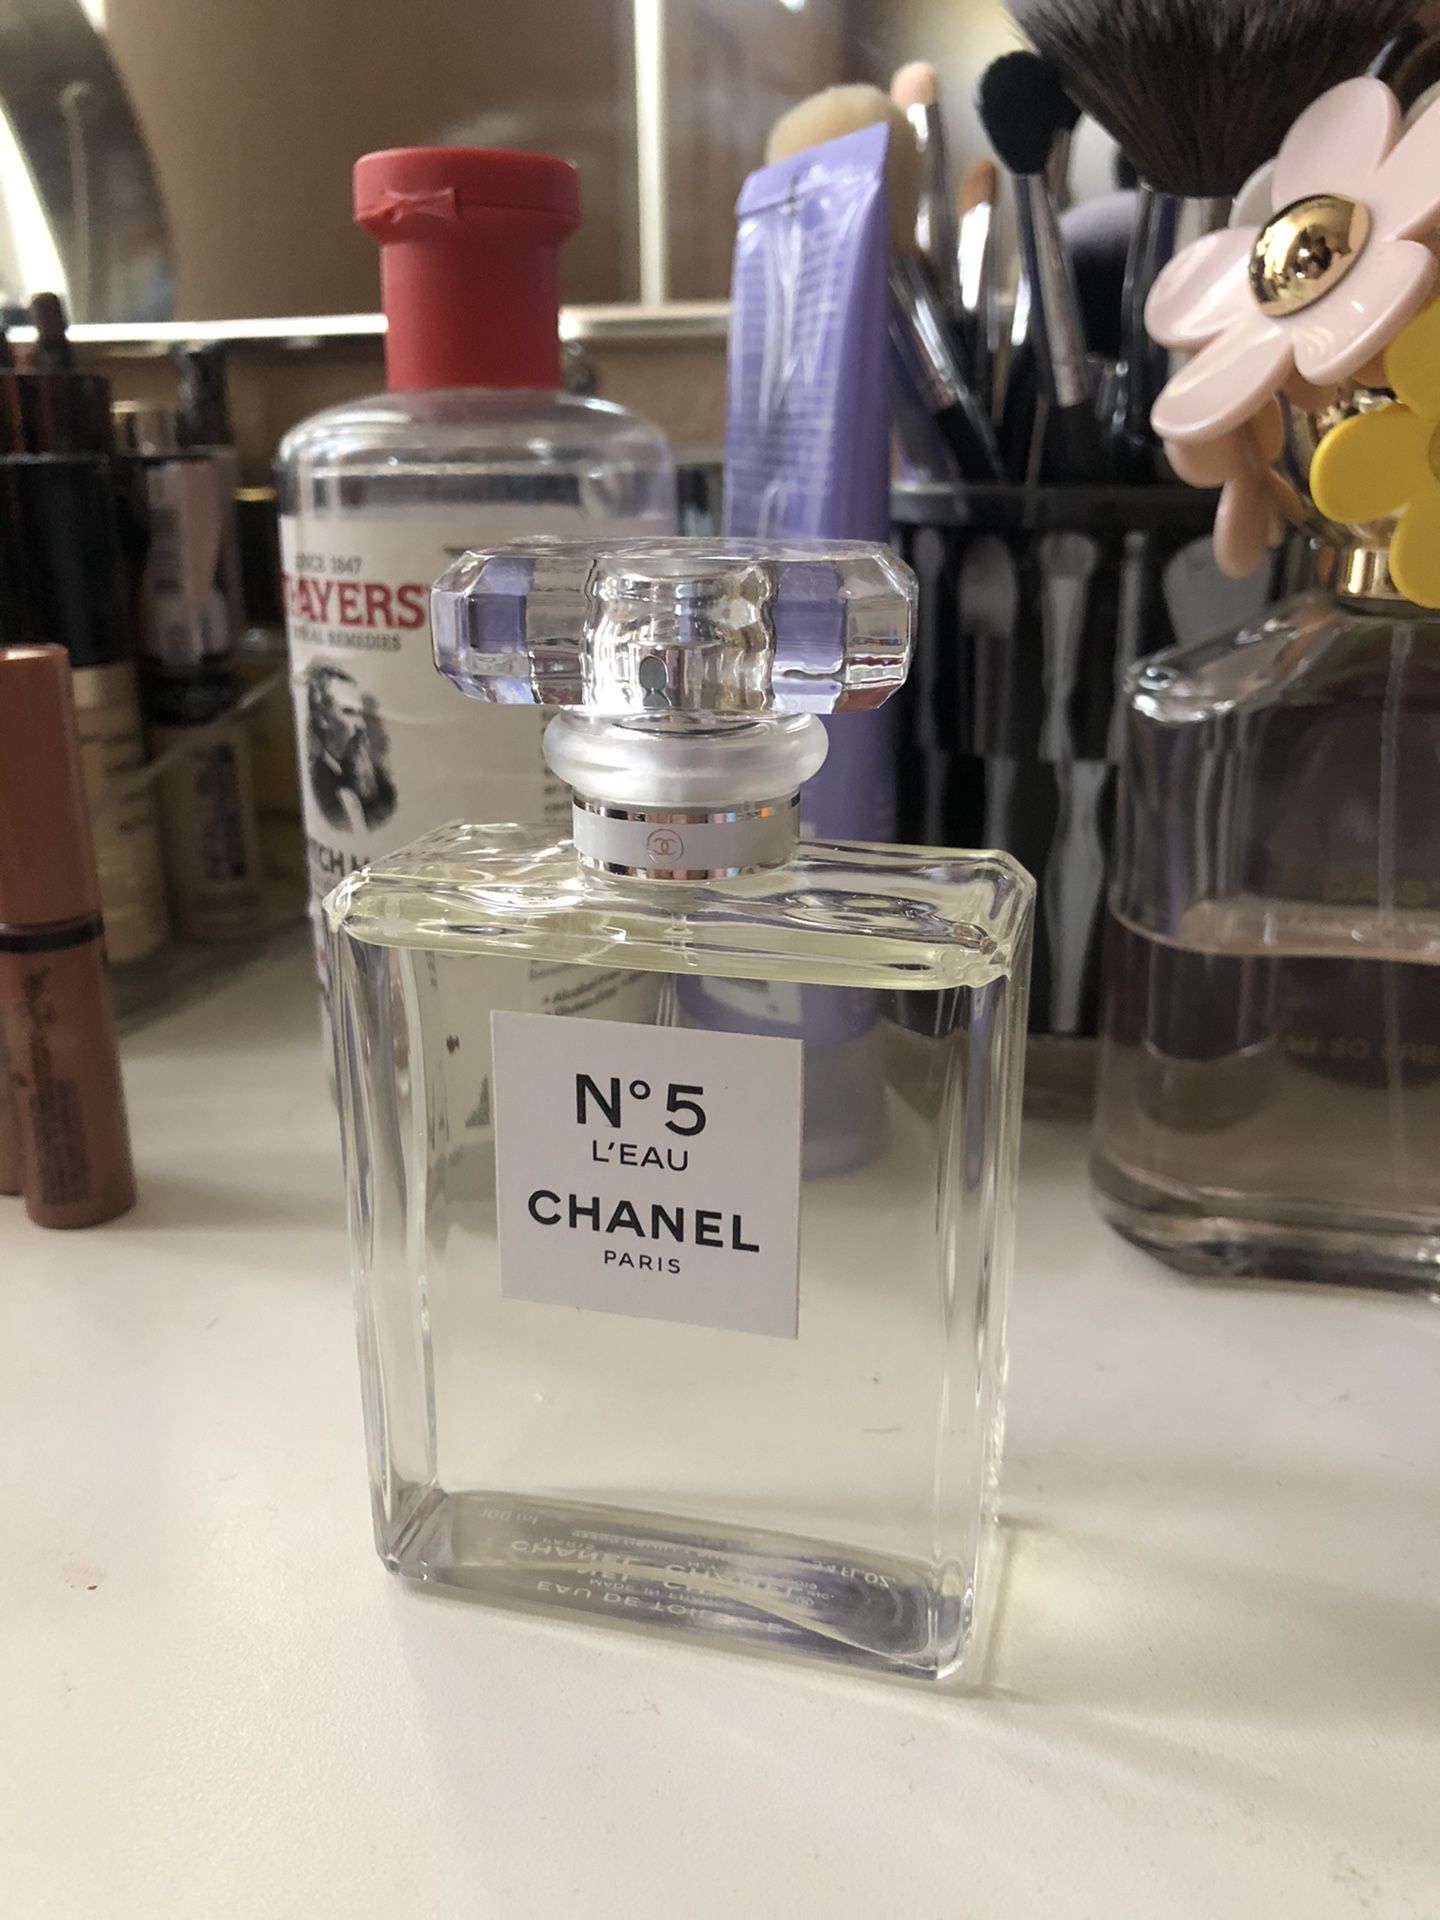 BRAND NEW Chanel N5 Perfume